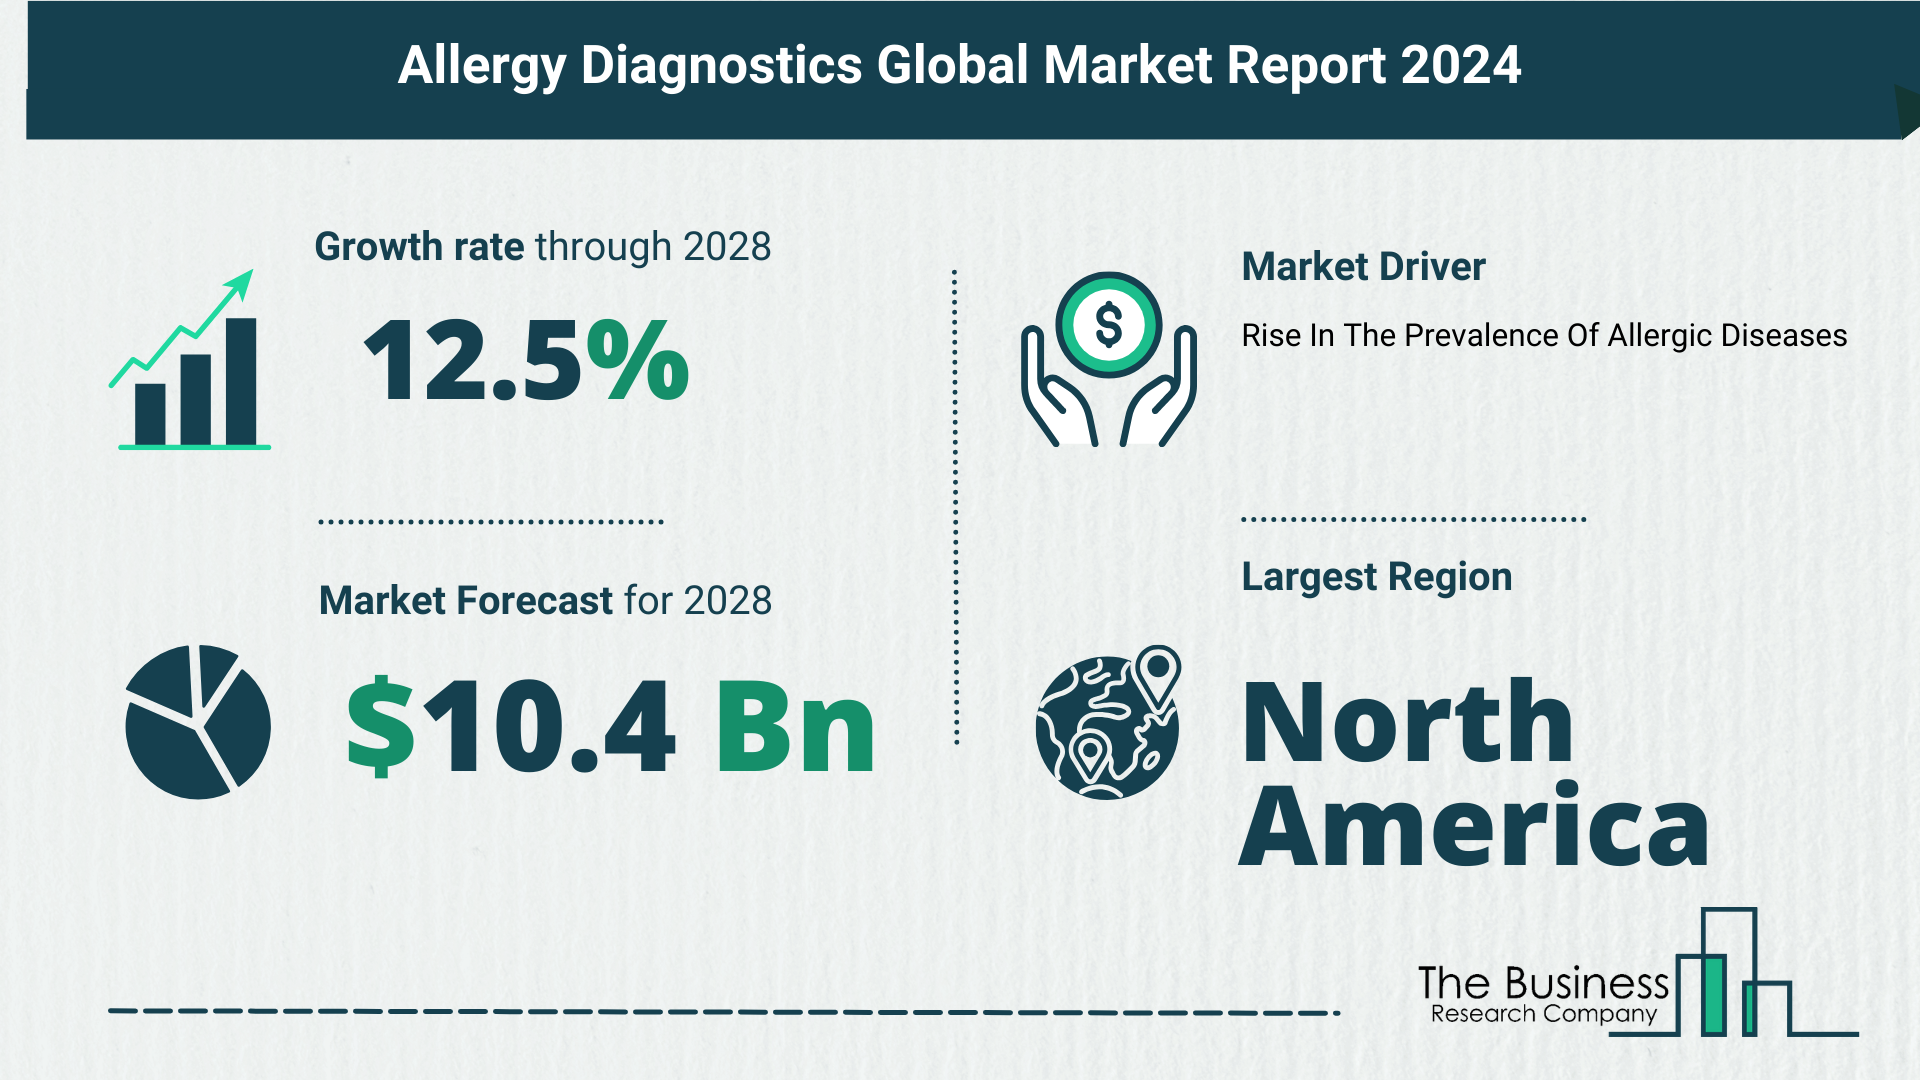 Key Takeaways From The Global Allergy Diagnostics Market Forecast 2024